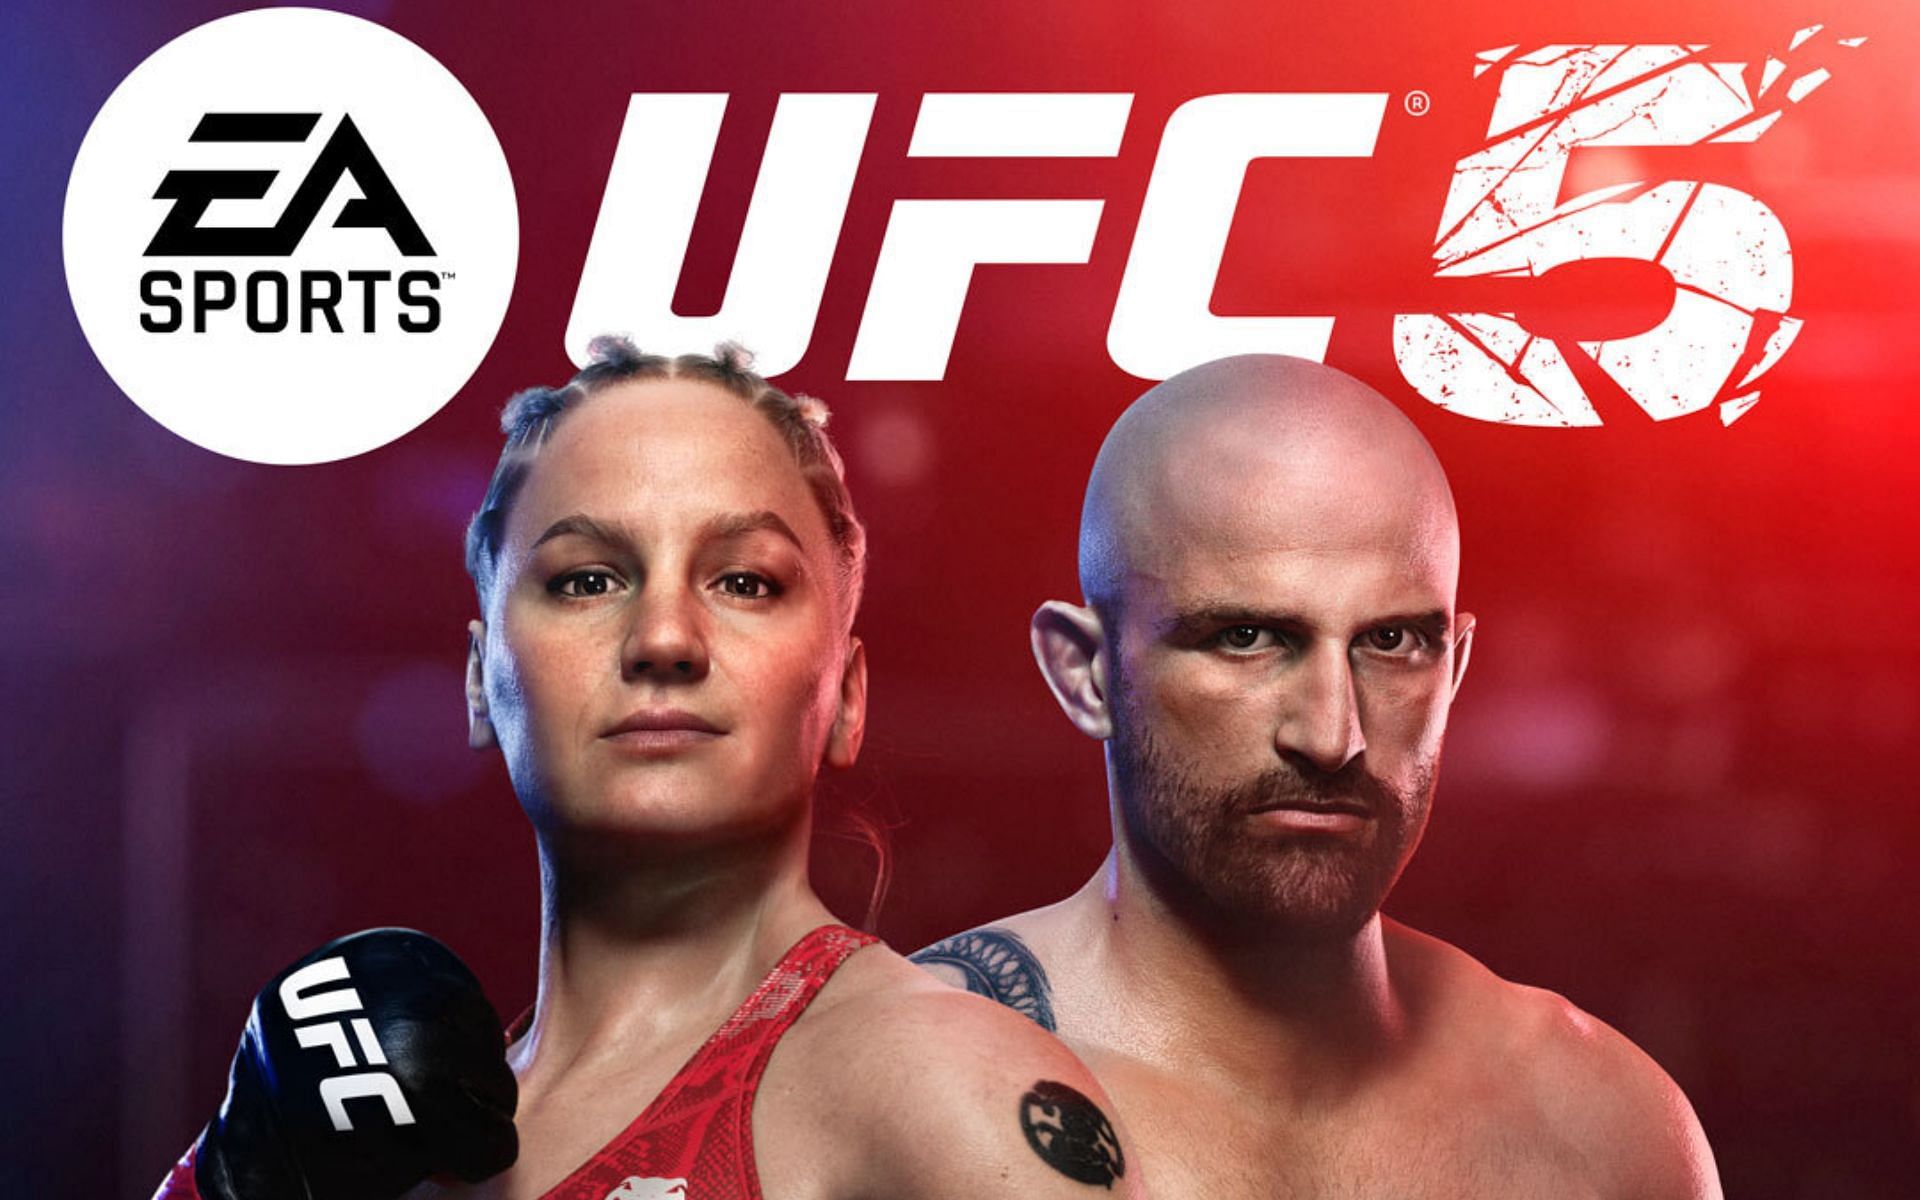 UFC 5 cover [Photo credit: @easportsufc - Instagram]